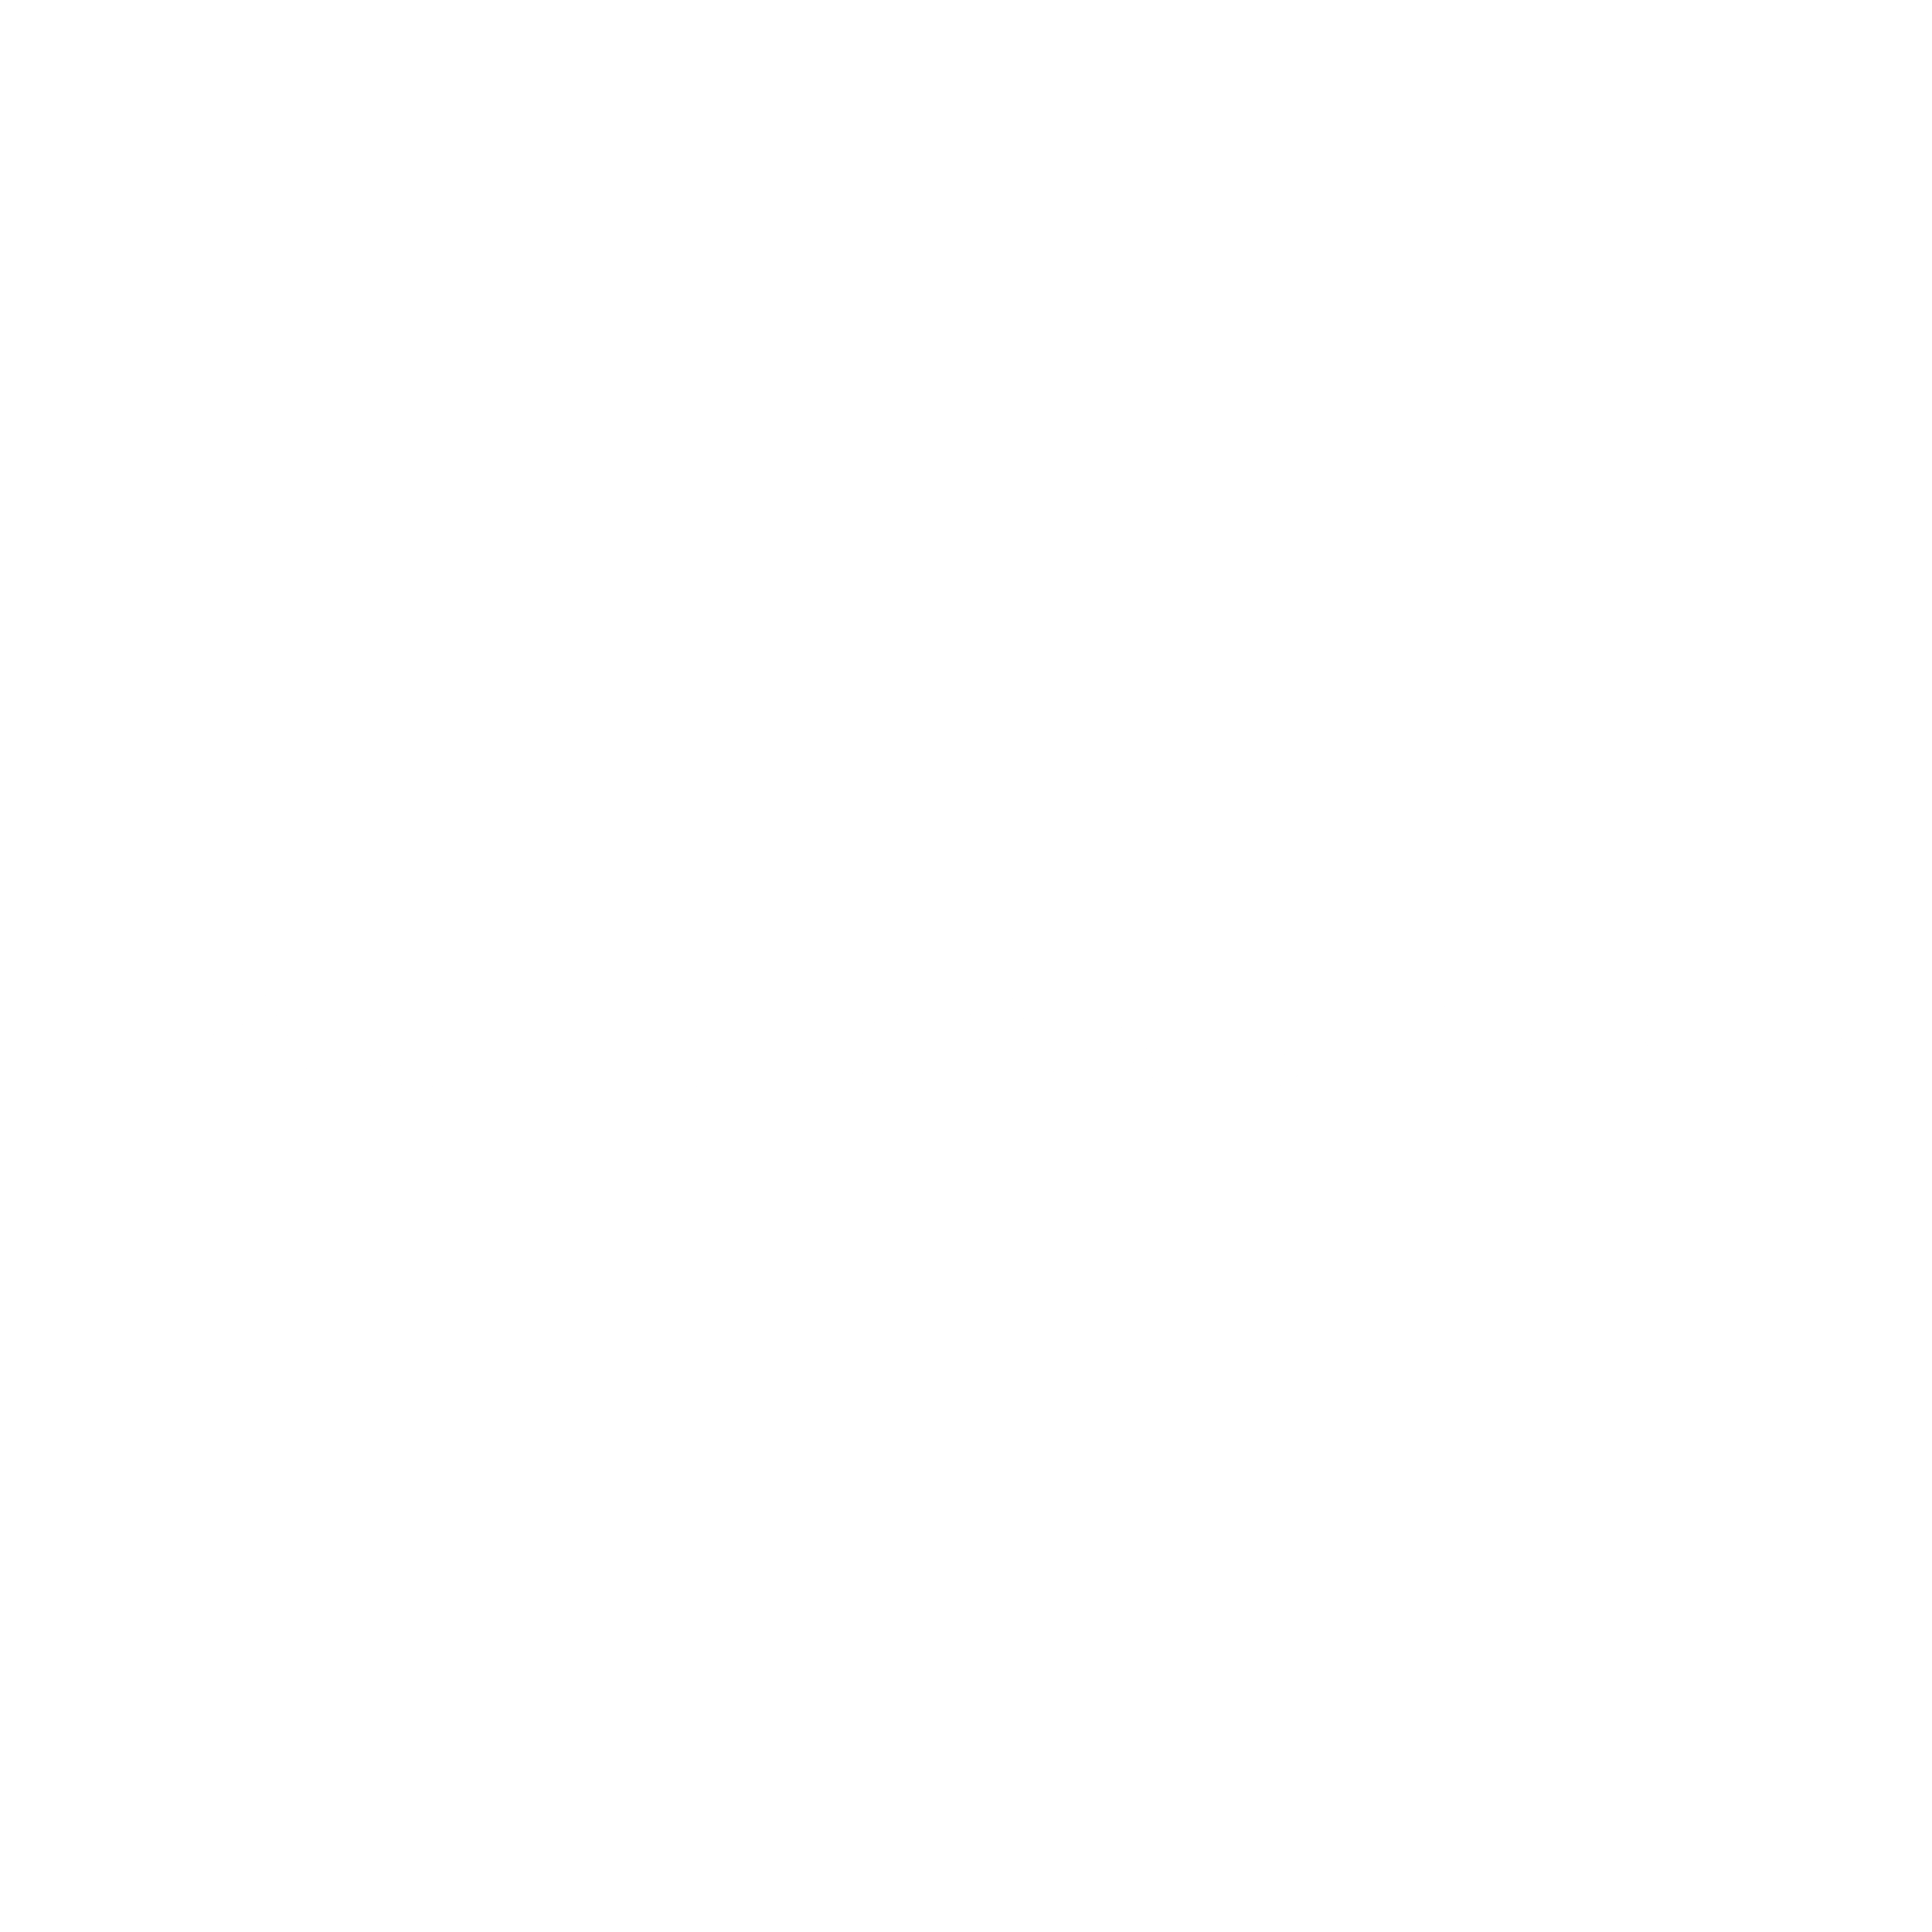 Arthur Andersen Logo - Arthur Andersen 01 Logo PNG Transparent & SVG Vector - Freebie Supply